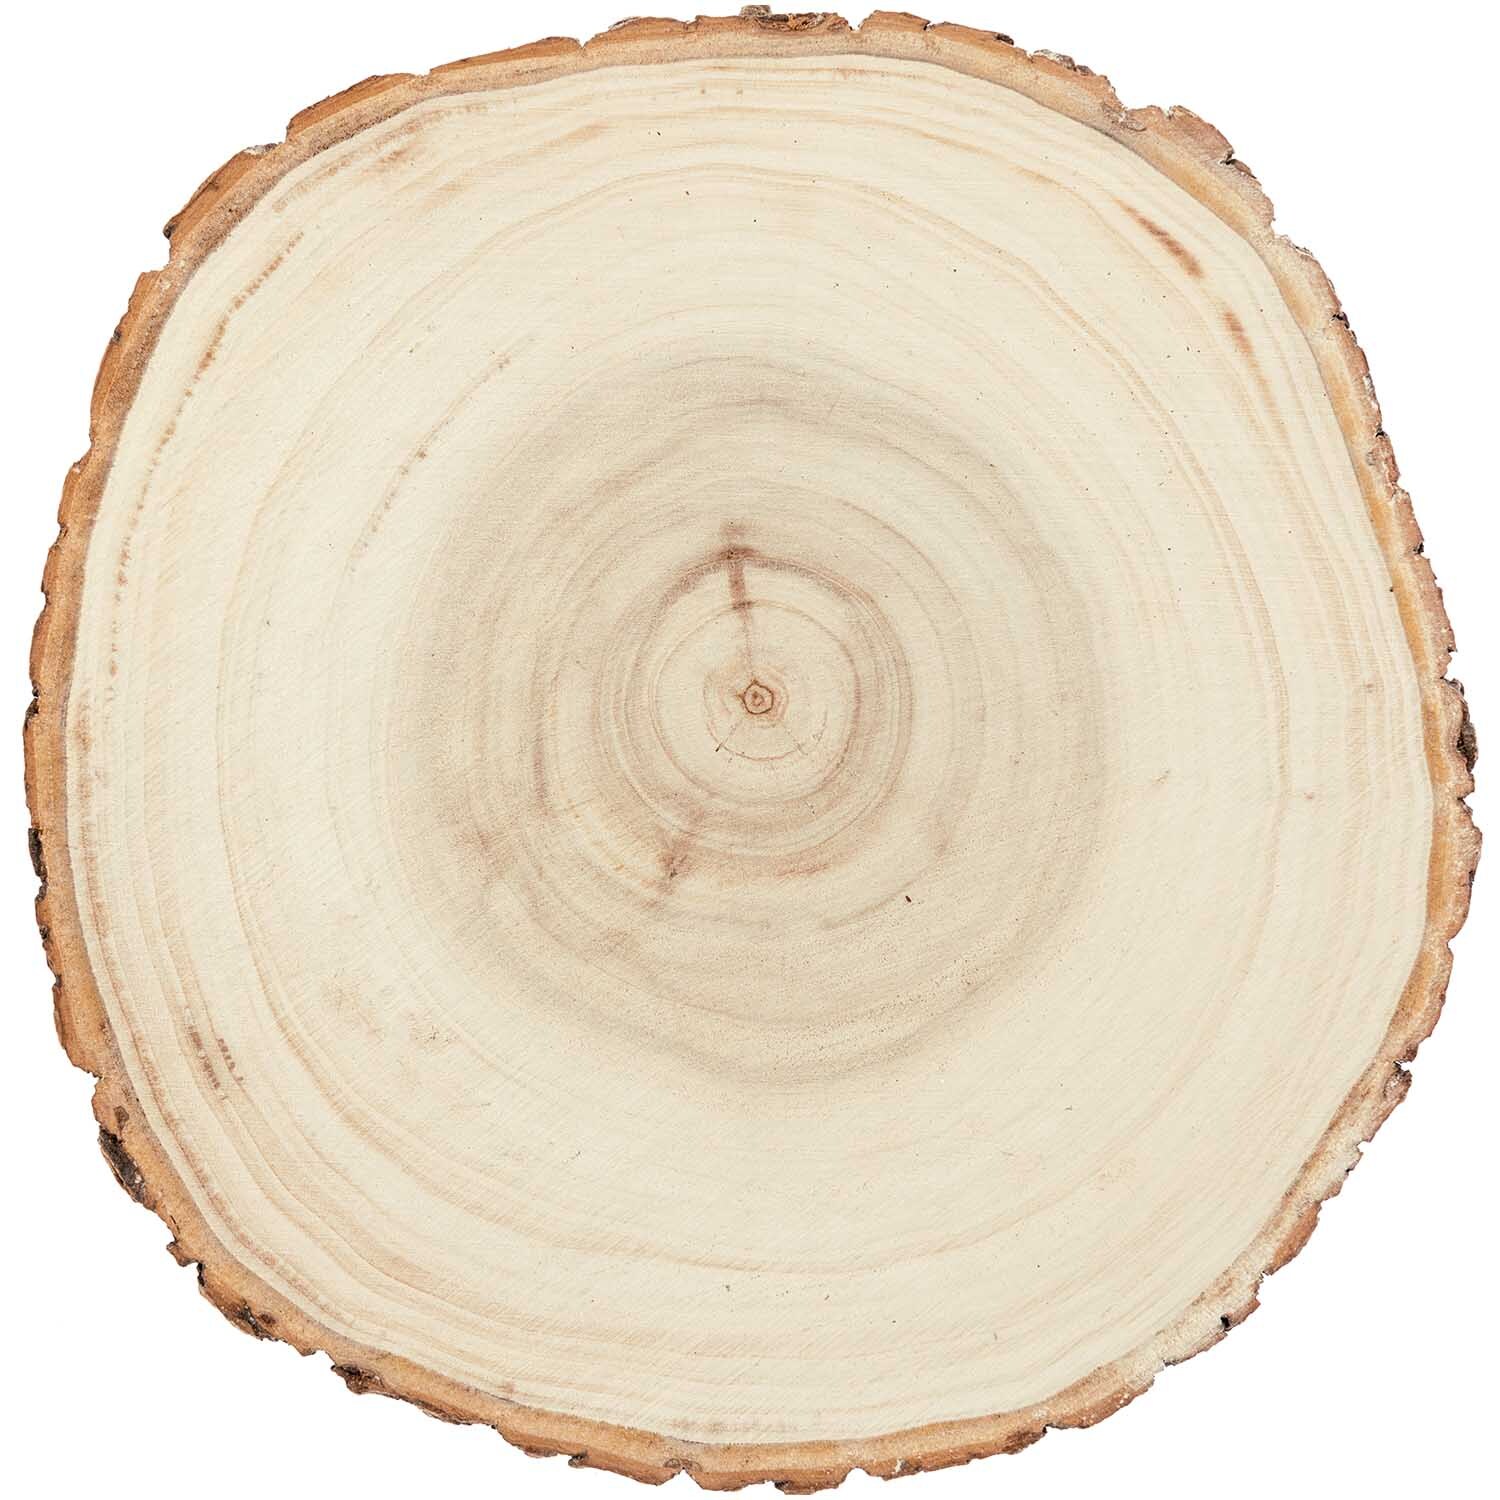 Holzscheibe groß Ø16-19cm 1,5cm dick